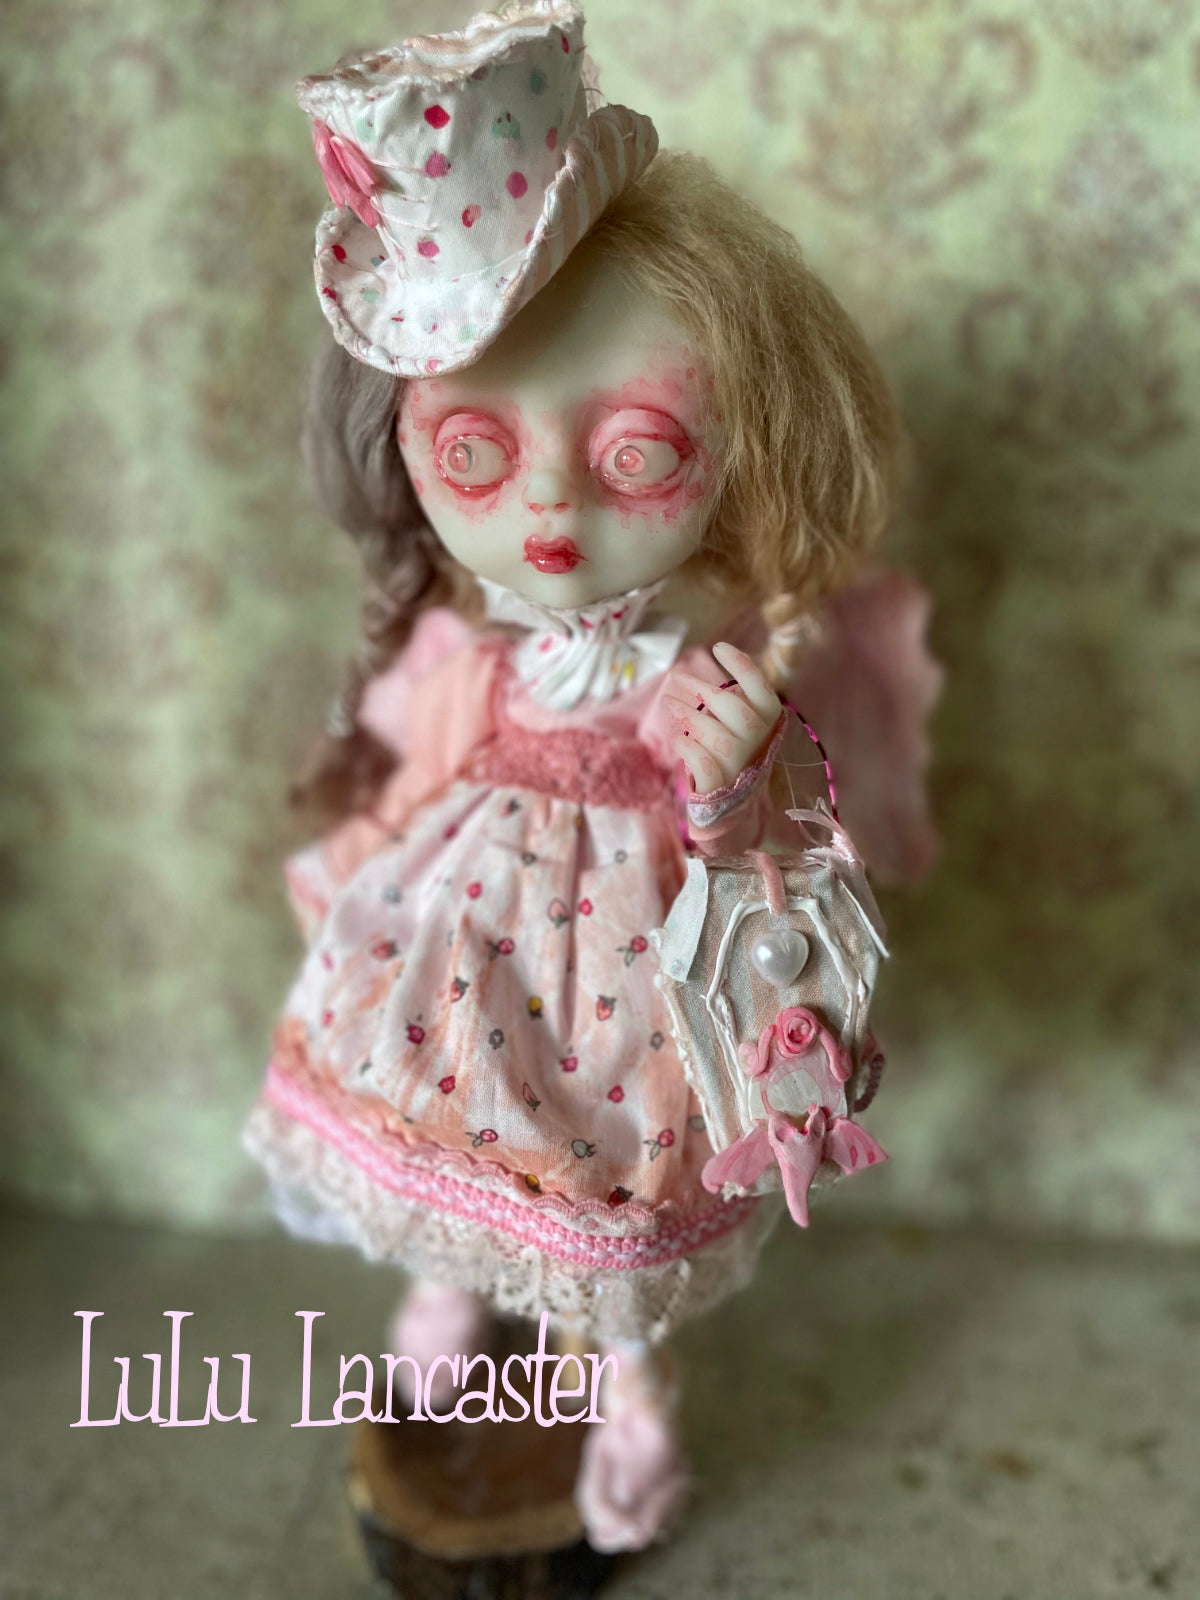 Tarian the Pink Bat Girl~ Goth Original LuLu Lancaster Art Doll